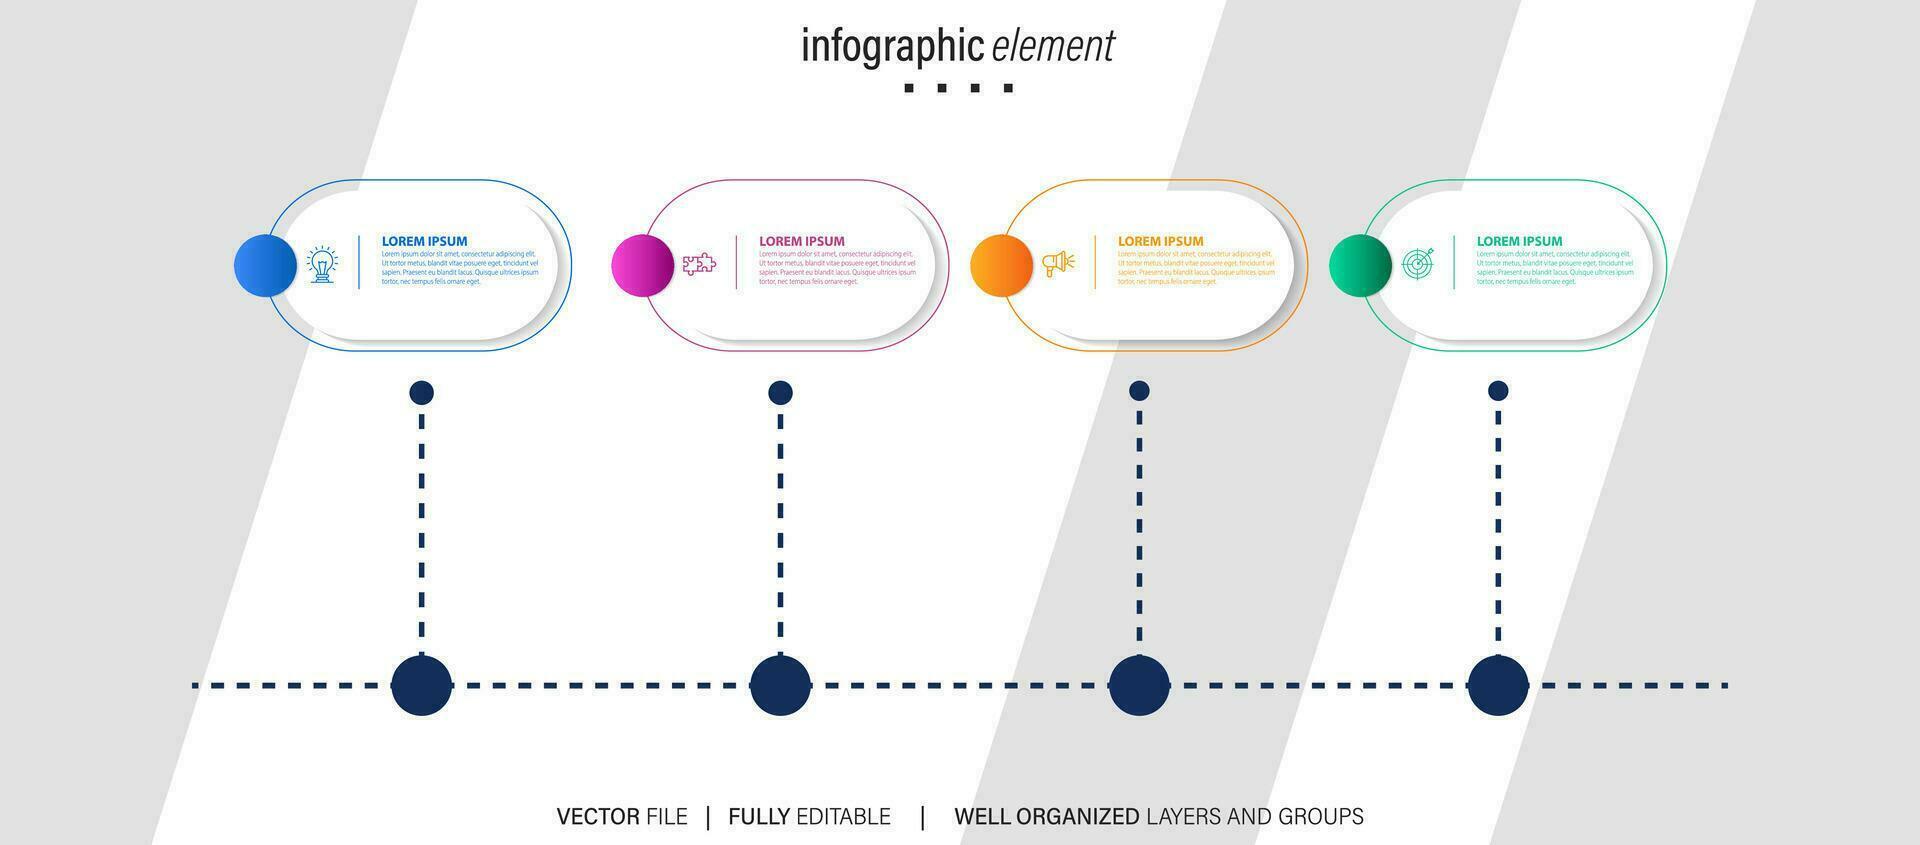 infographic design mall. vektor illustration.